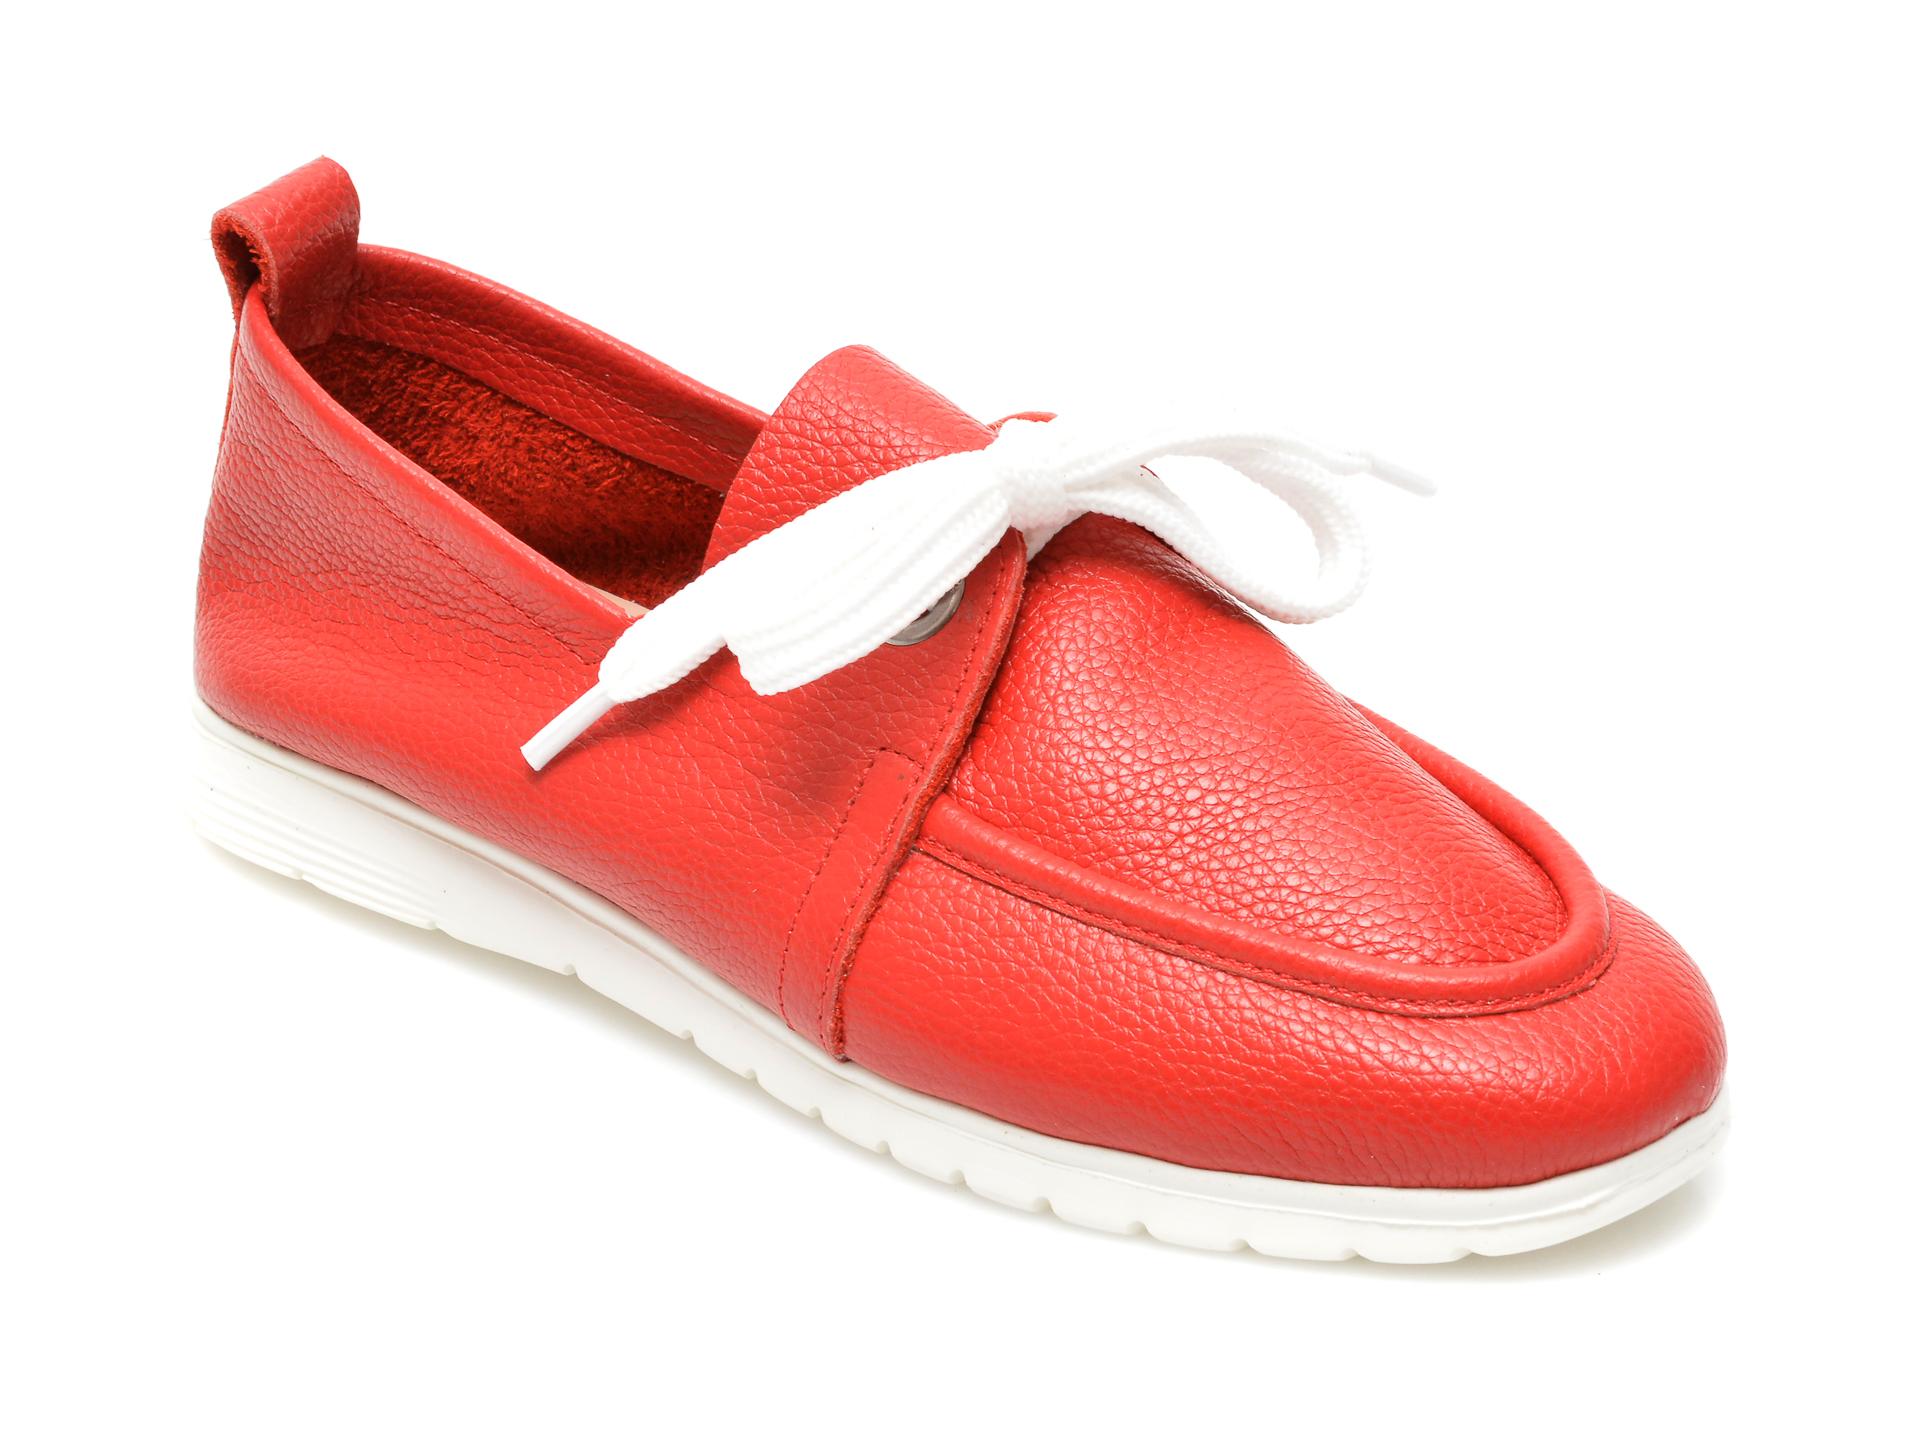 Pantofi TANCA rosii, 935, din piele naturala otter.ro